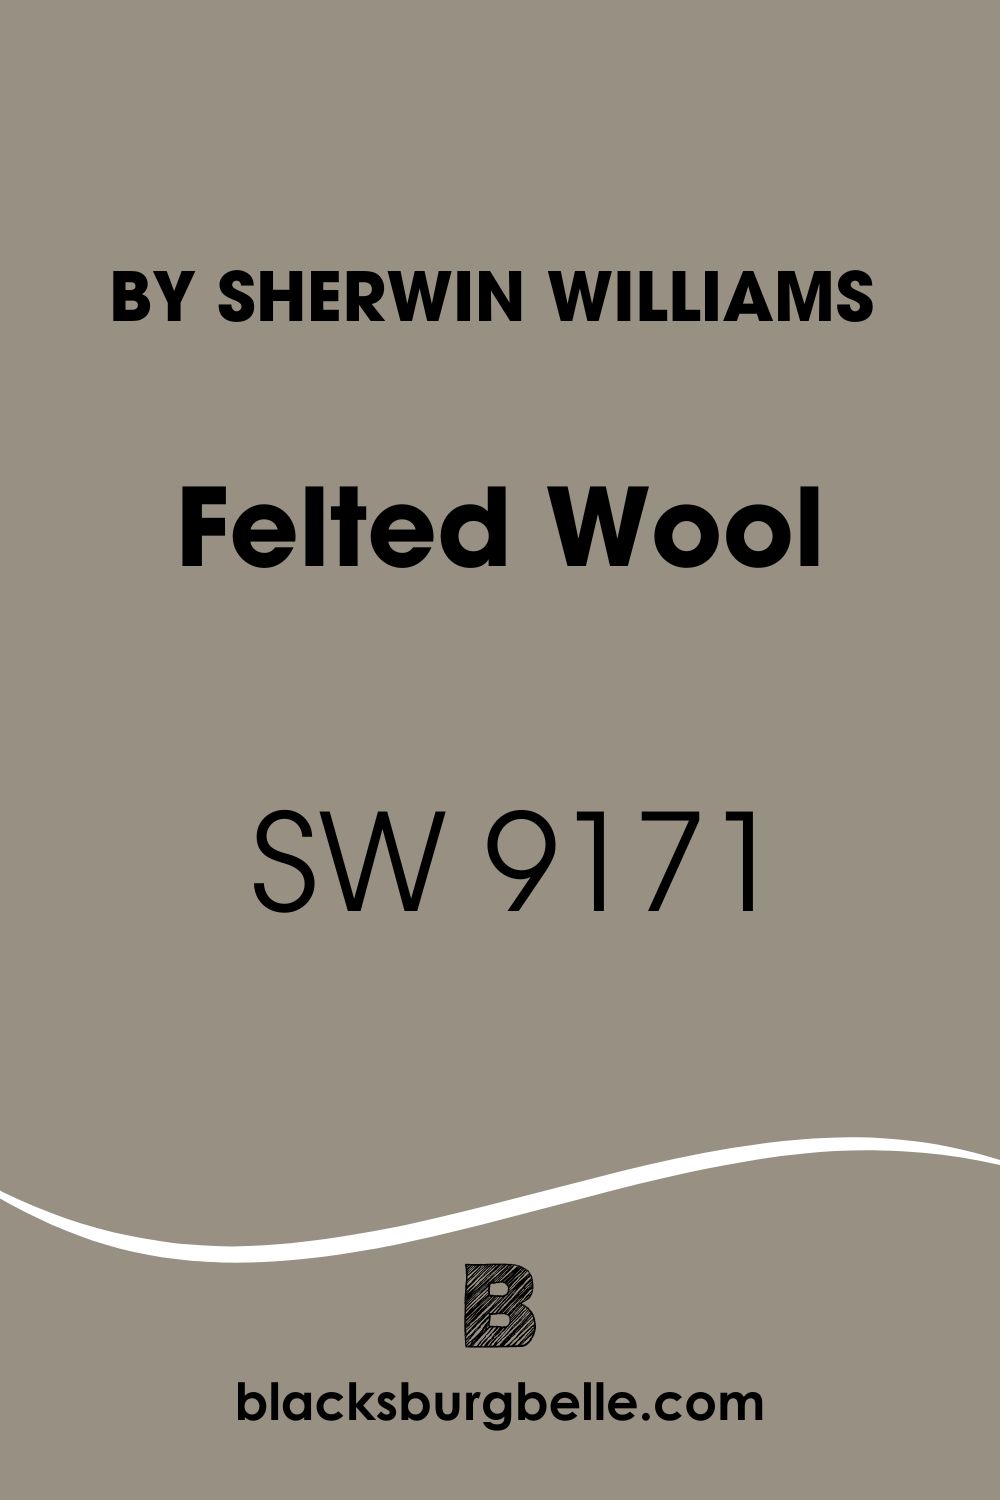 Felted Wool SW 9171